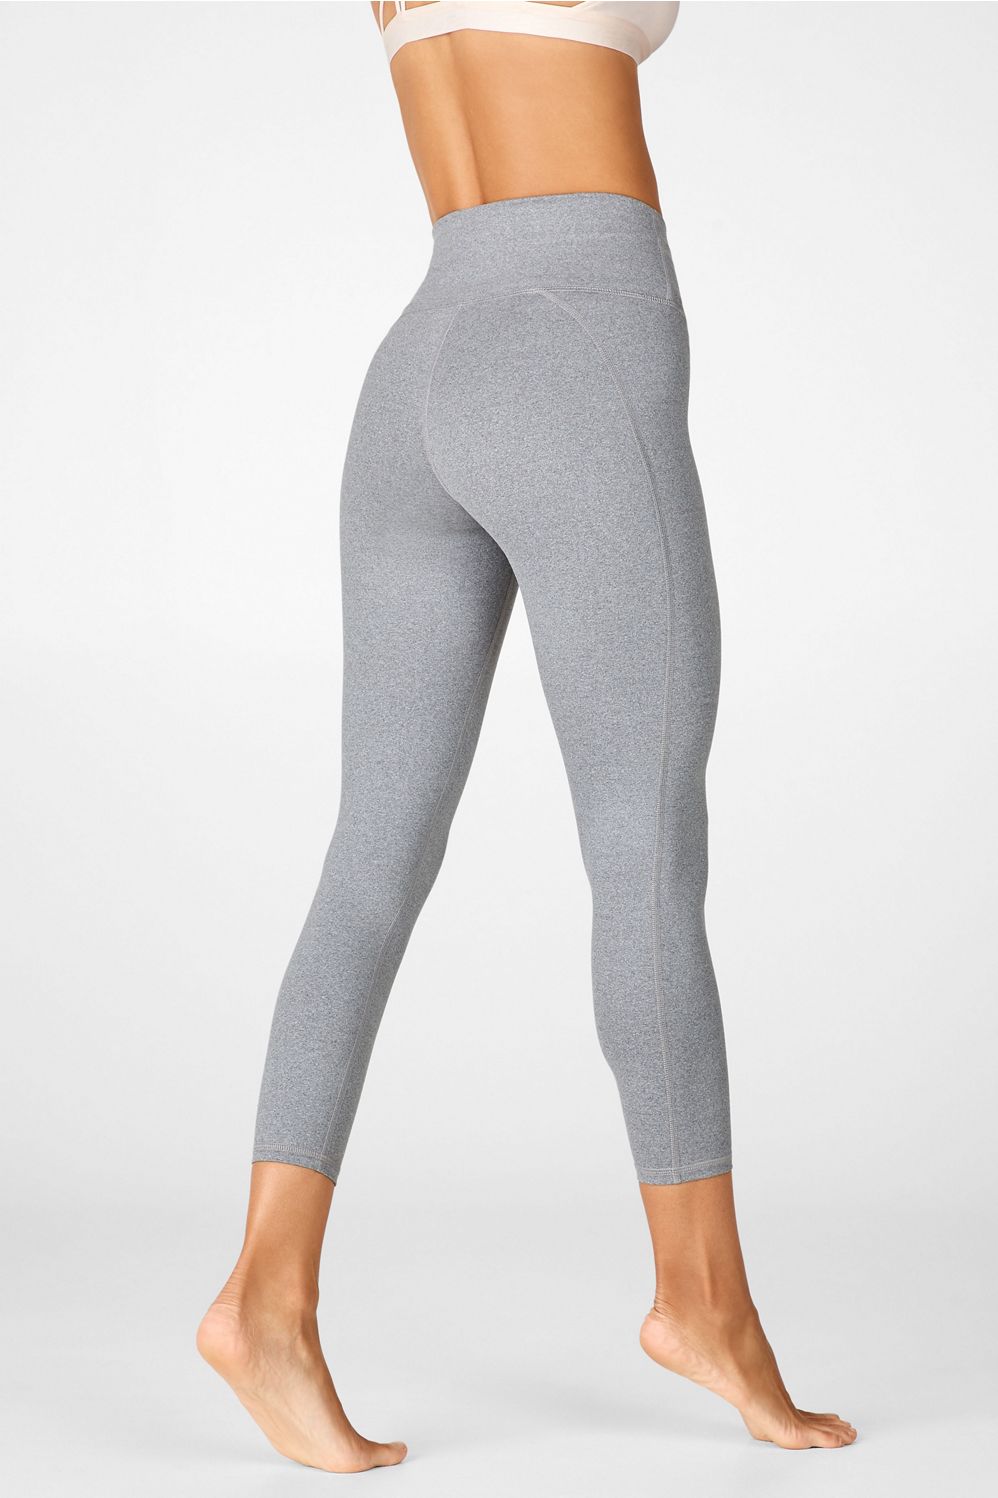 Fabletics Grey Full Length Pants Active Women's Size 3X